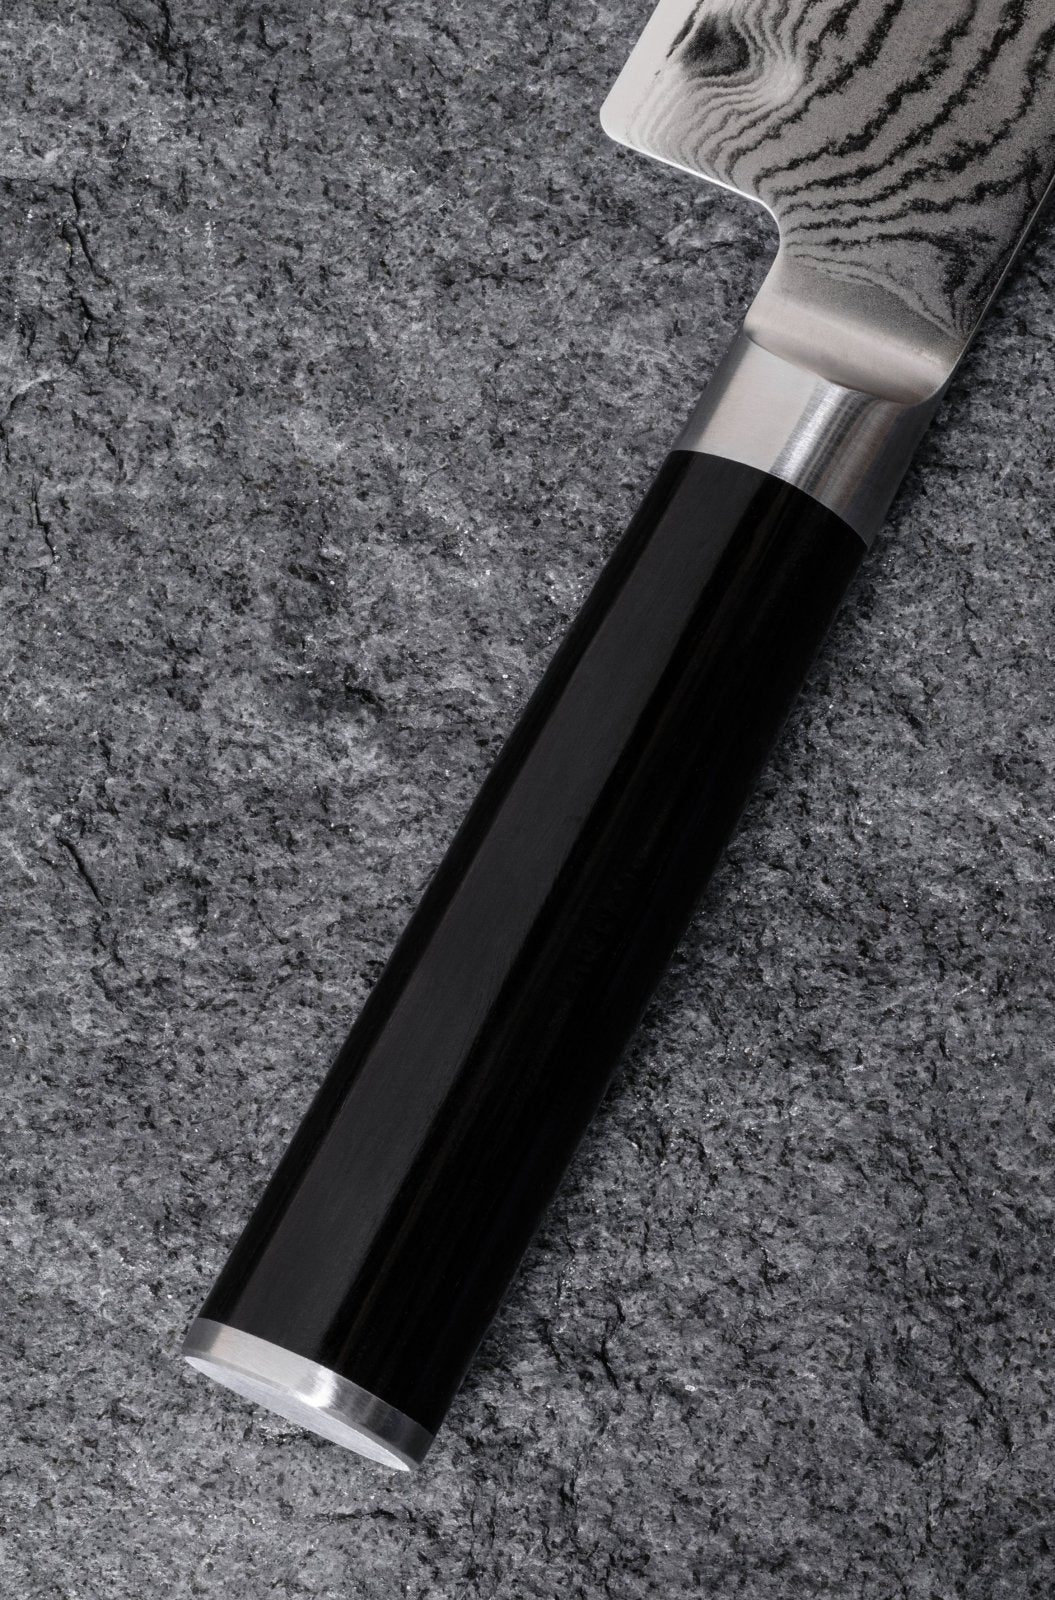 KAI Shun 23cm Bread Knife - KAI-DM-0705 - The Cotswold Knife Company